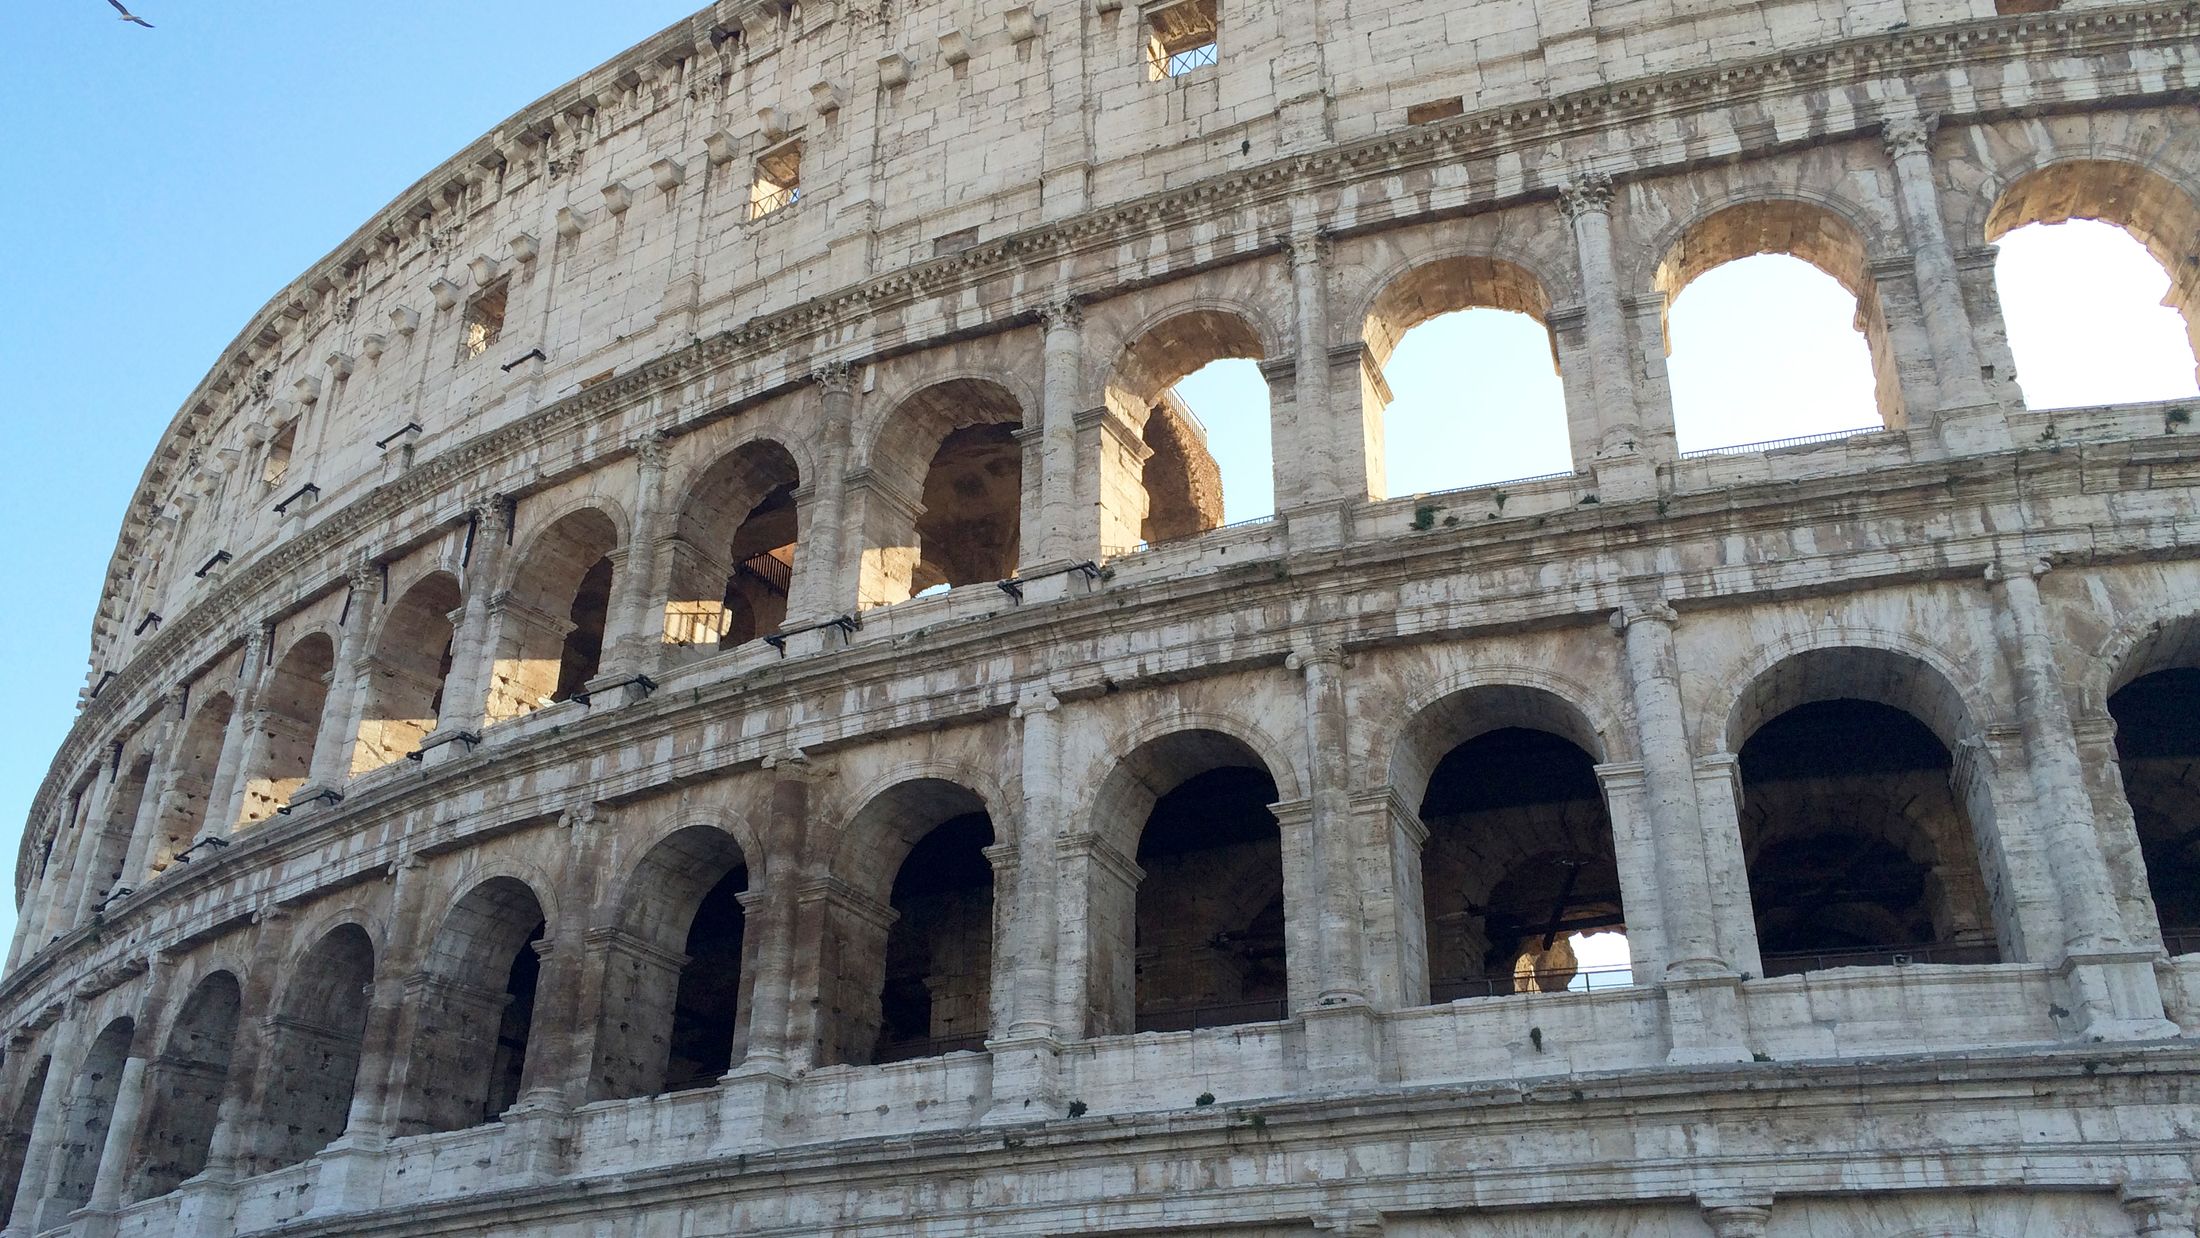 000940_Colosseum_Rome_Italy_Gemma_Brown_001-Hybris